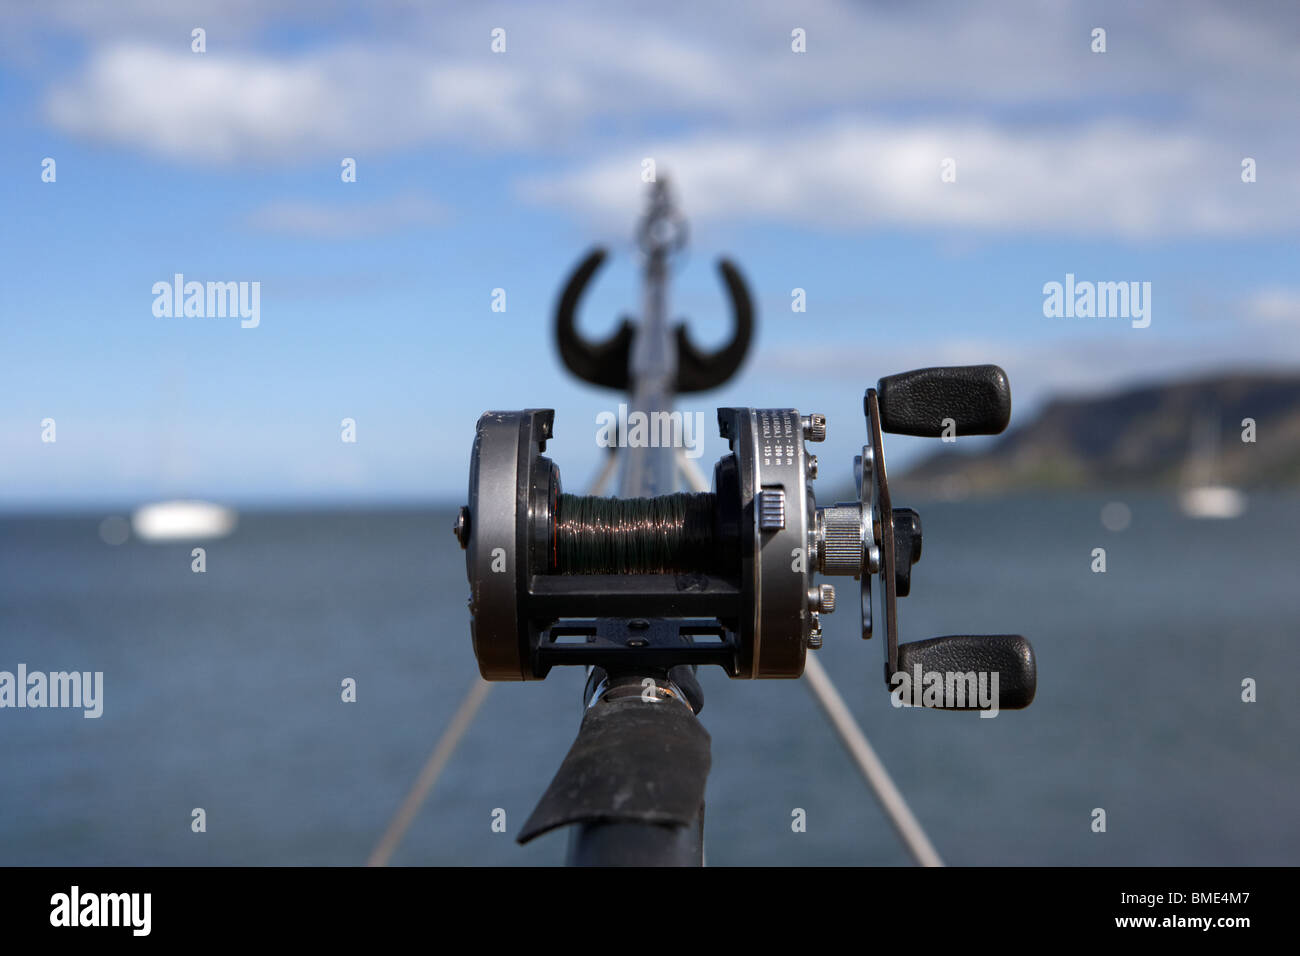 rod and reel fishing on the county antrim coast northern ireland uk Stock Photo